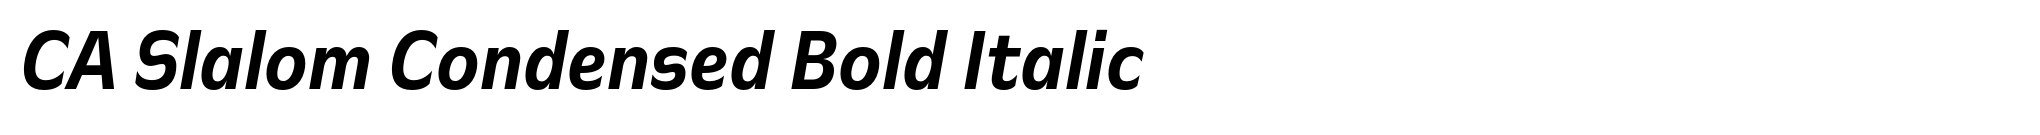 CA Slalom Condensed Bold Italic image